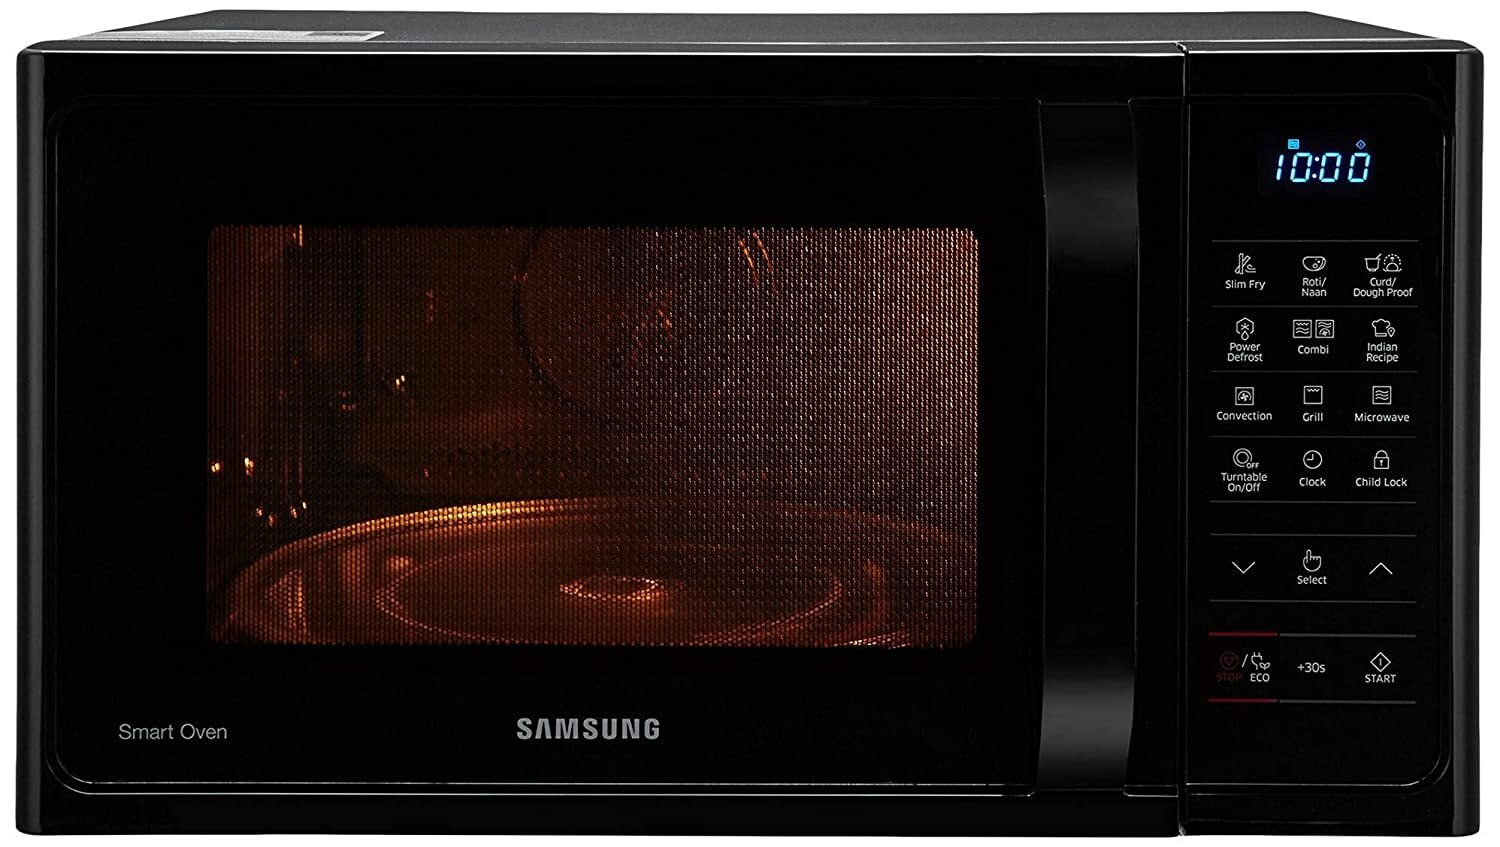 Samsung MC28H5033CK 28 litre Microwave Oven On Dillimall.Com